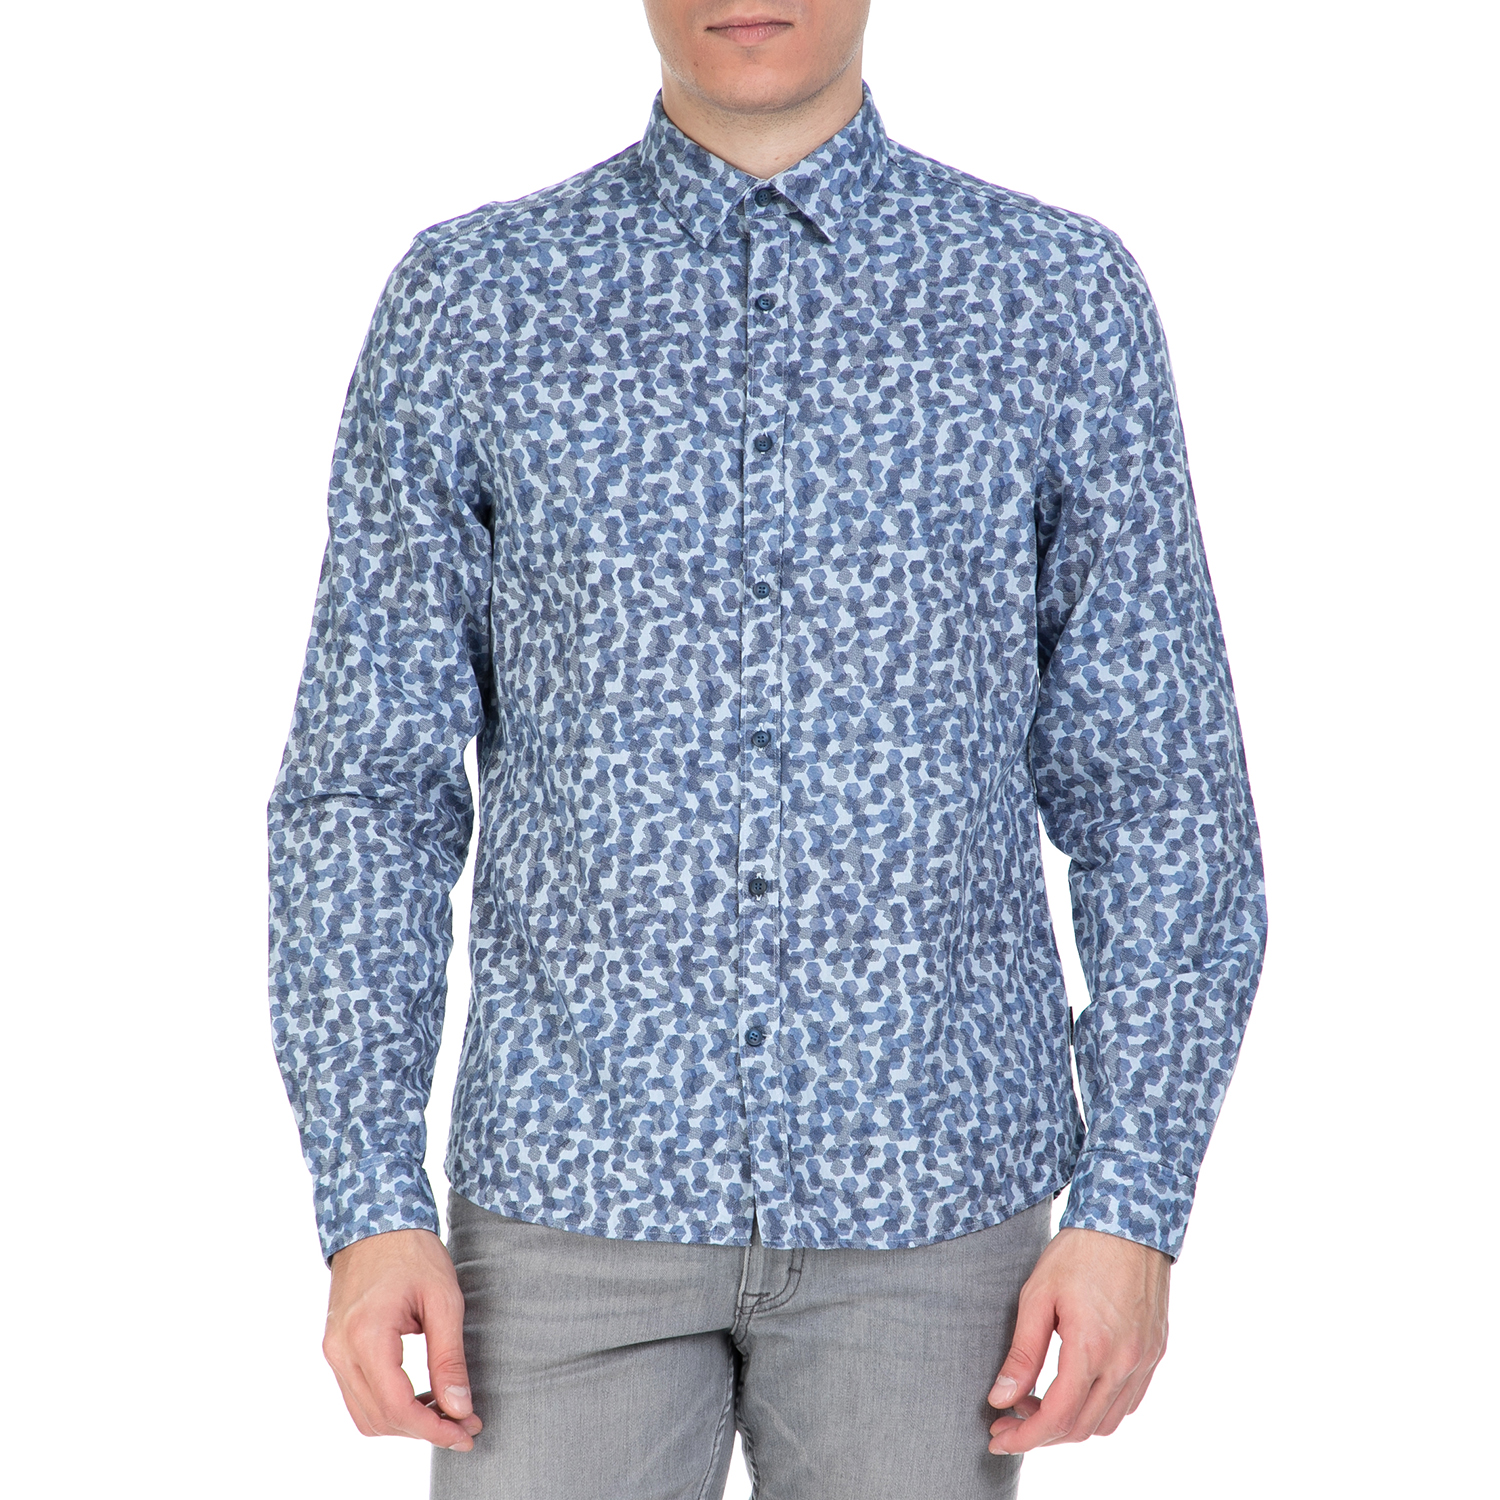 CK - Ανδρικό πουκάμισο CK GALEN μπλε με μοτίβο Ανδρικά/Ρούχα/Πουκάμισα/Μακρυμάνικα